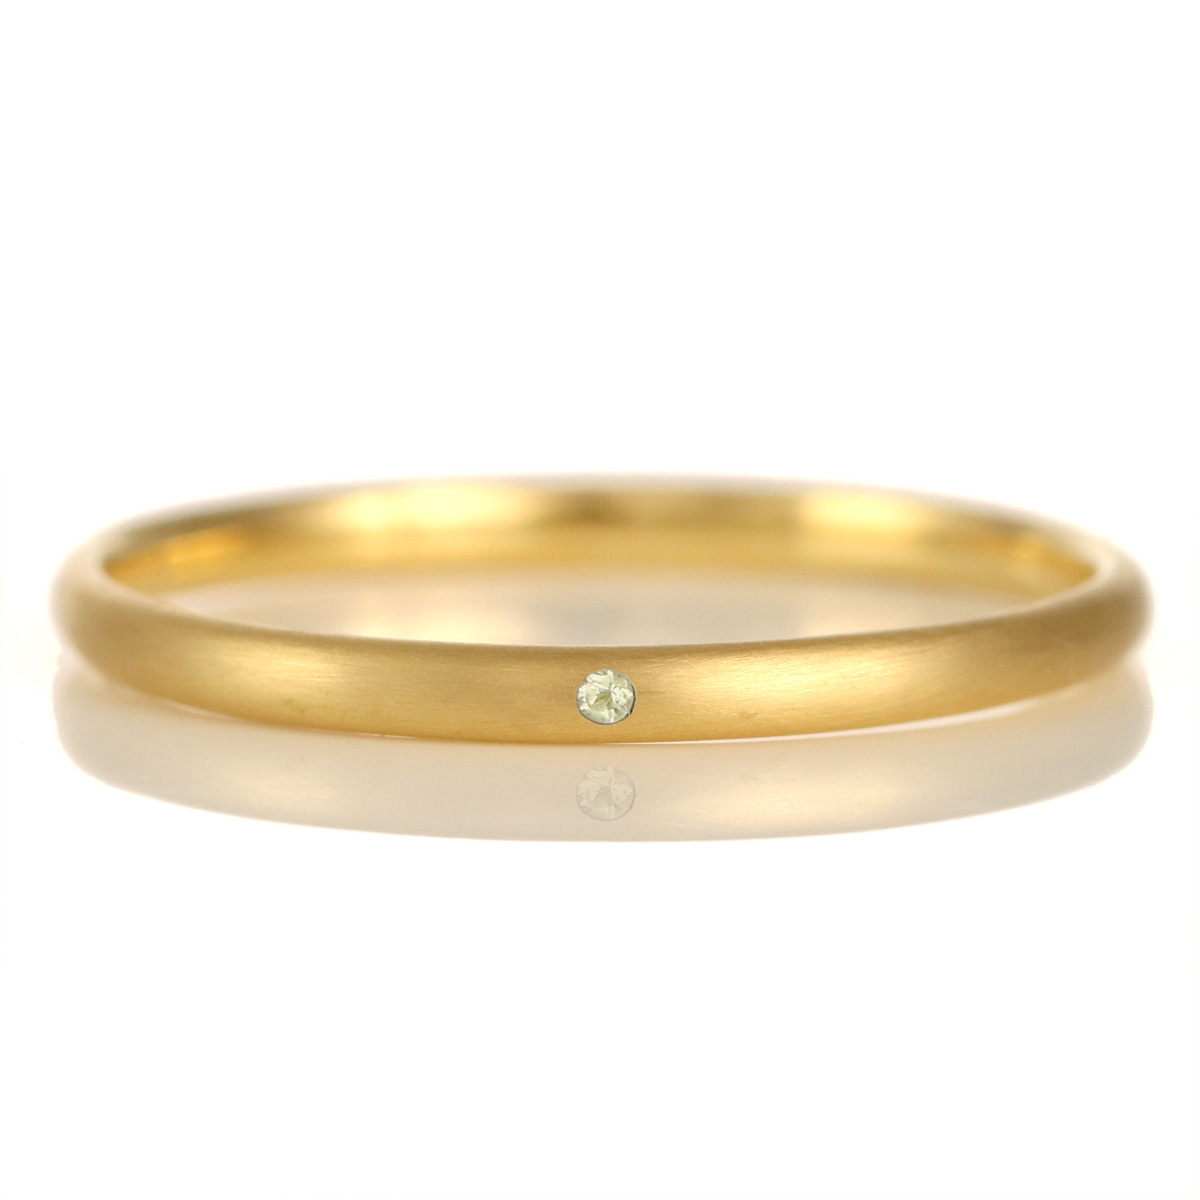 J125-03002008MT 結婚指輪“選べる結婚指輪“ |東京でオーダーメイドの結婚指輪・婚約指輪のSUEHIRO(スエヒロ) | SUEHIRO